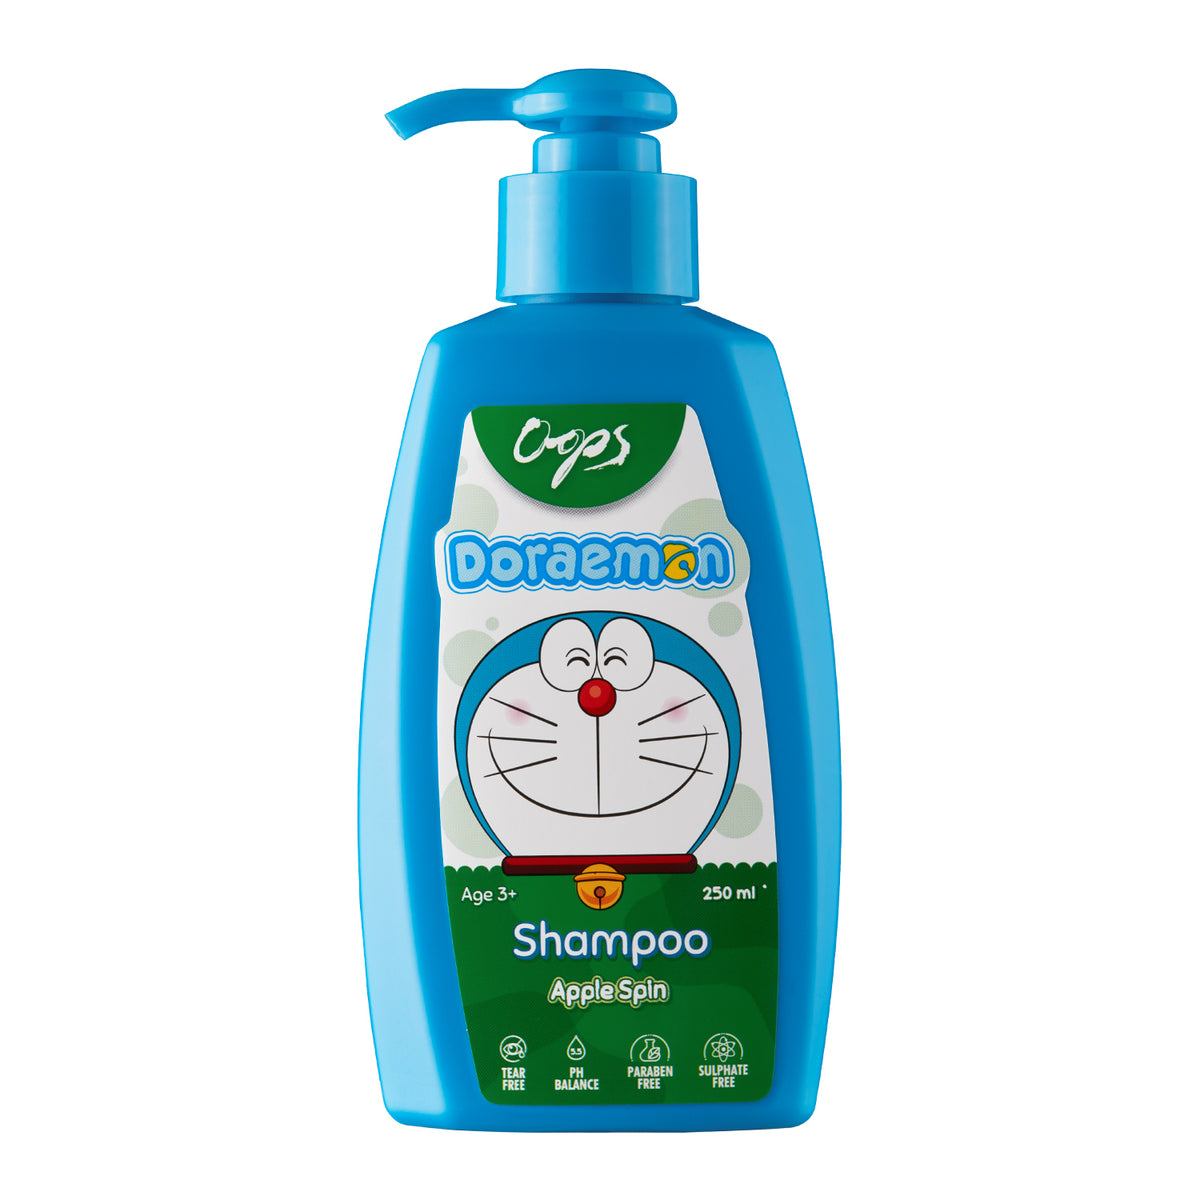 Oops Doraemon Shampoo - Apple Spin, 250ml : Buy 1 Get 1 Free! Gardenia Cosmotrade LLP